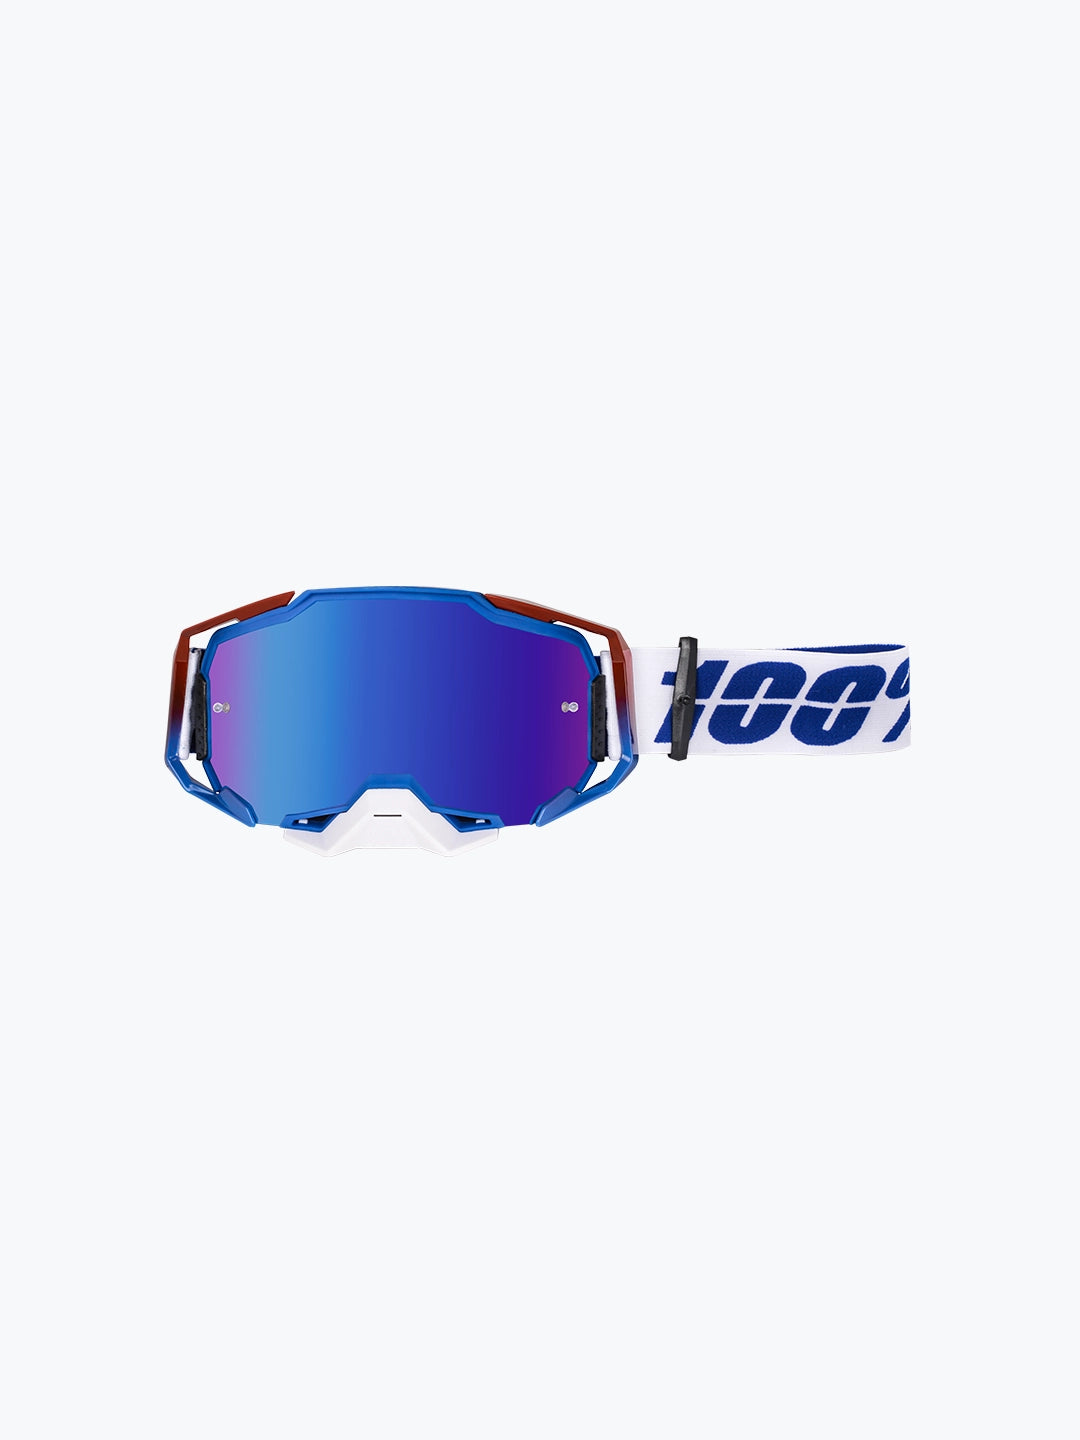 Goggles 100% - 147 Blue Tint